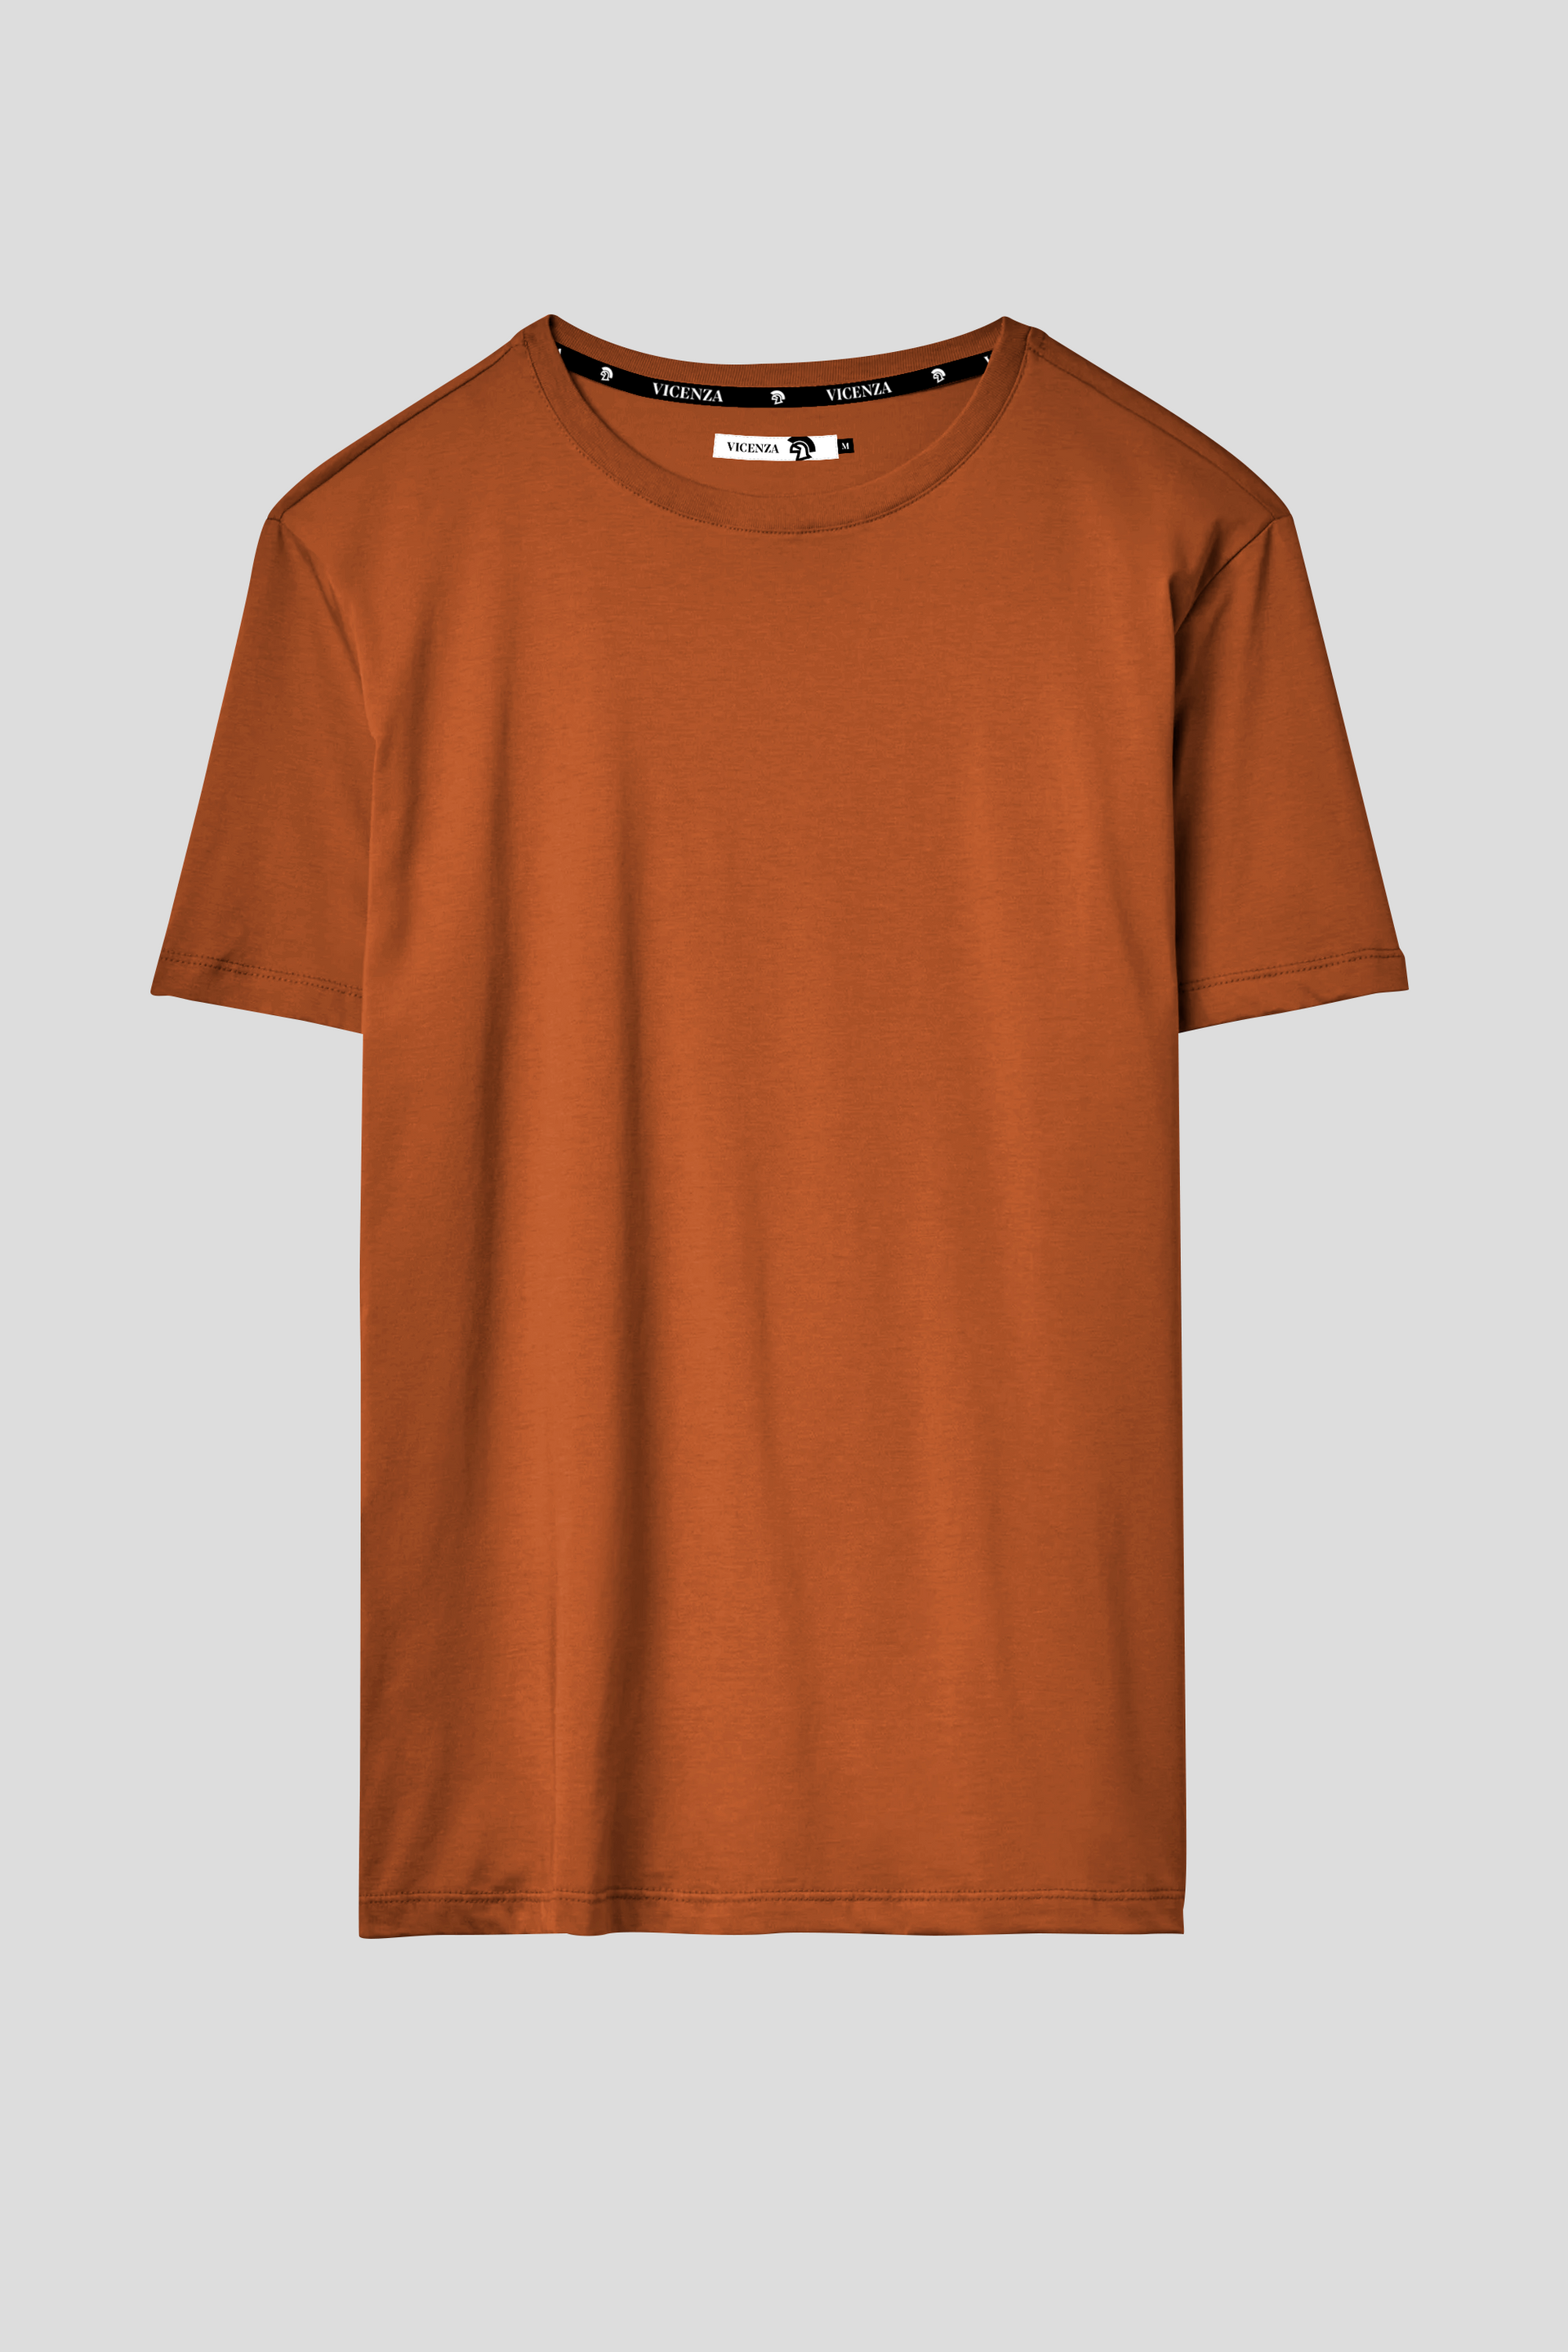 Camiseta de modal - marrón cafe - Kiabi - 8.00€